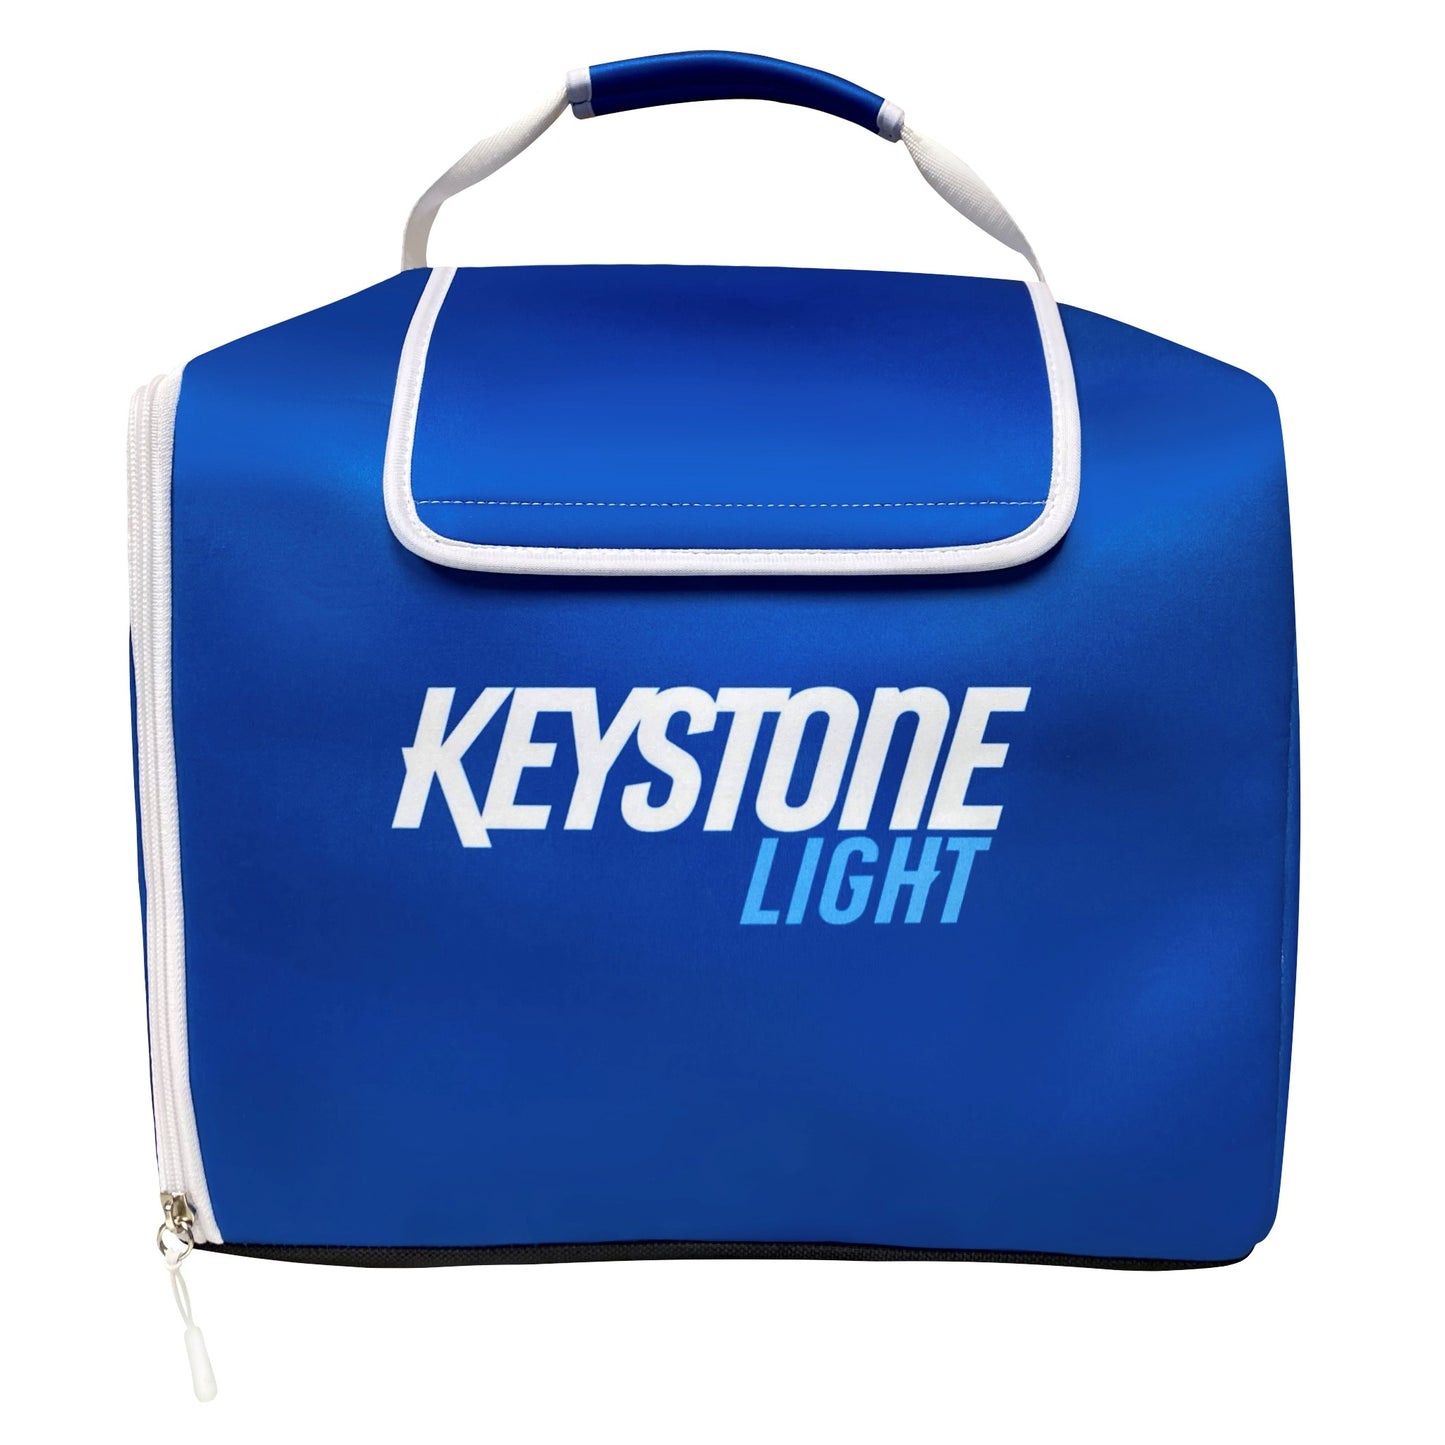 Keystone Light 30-Pack Cooler